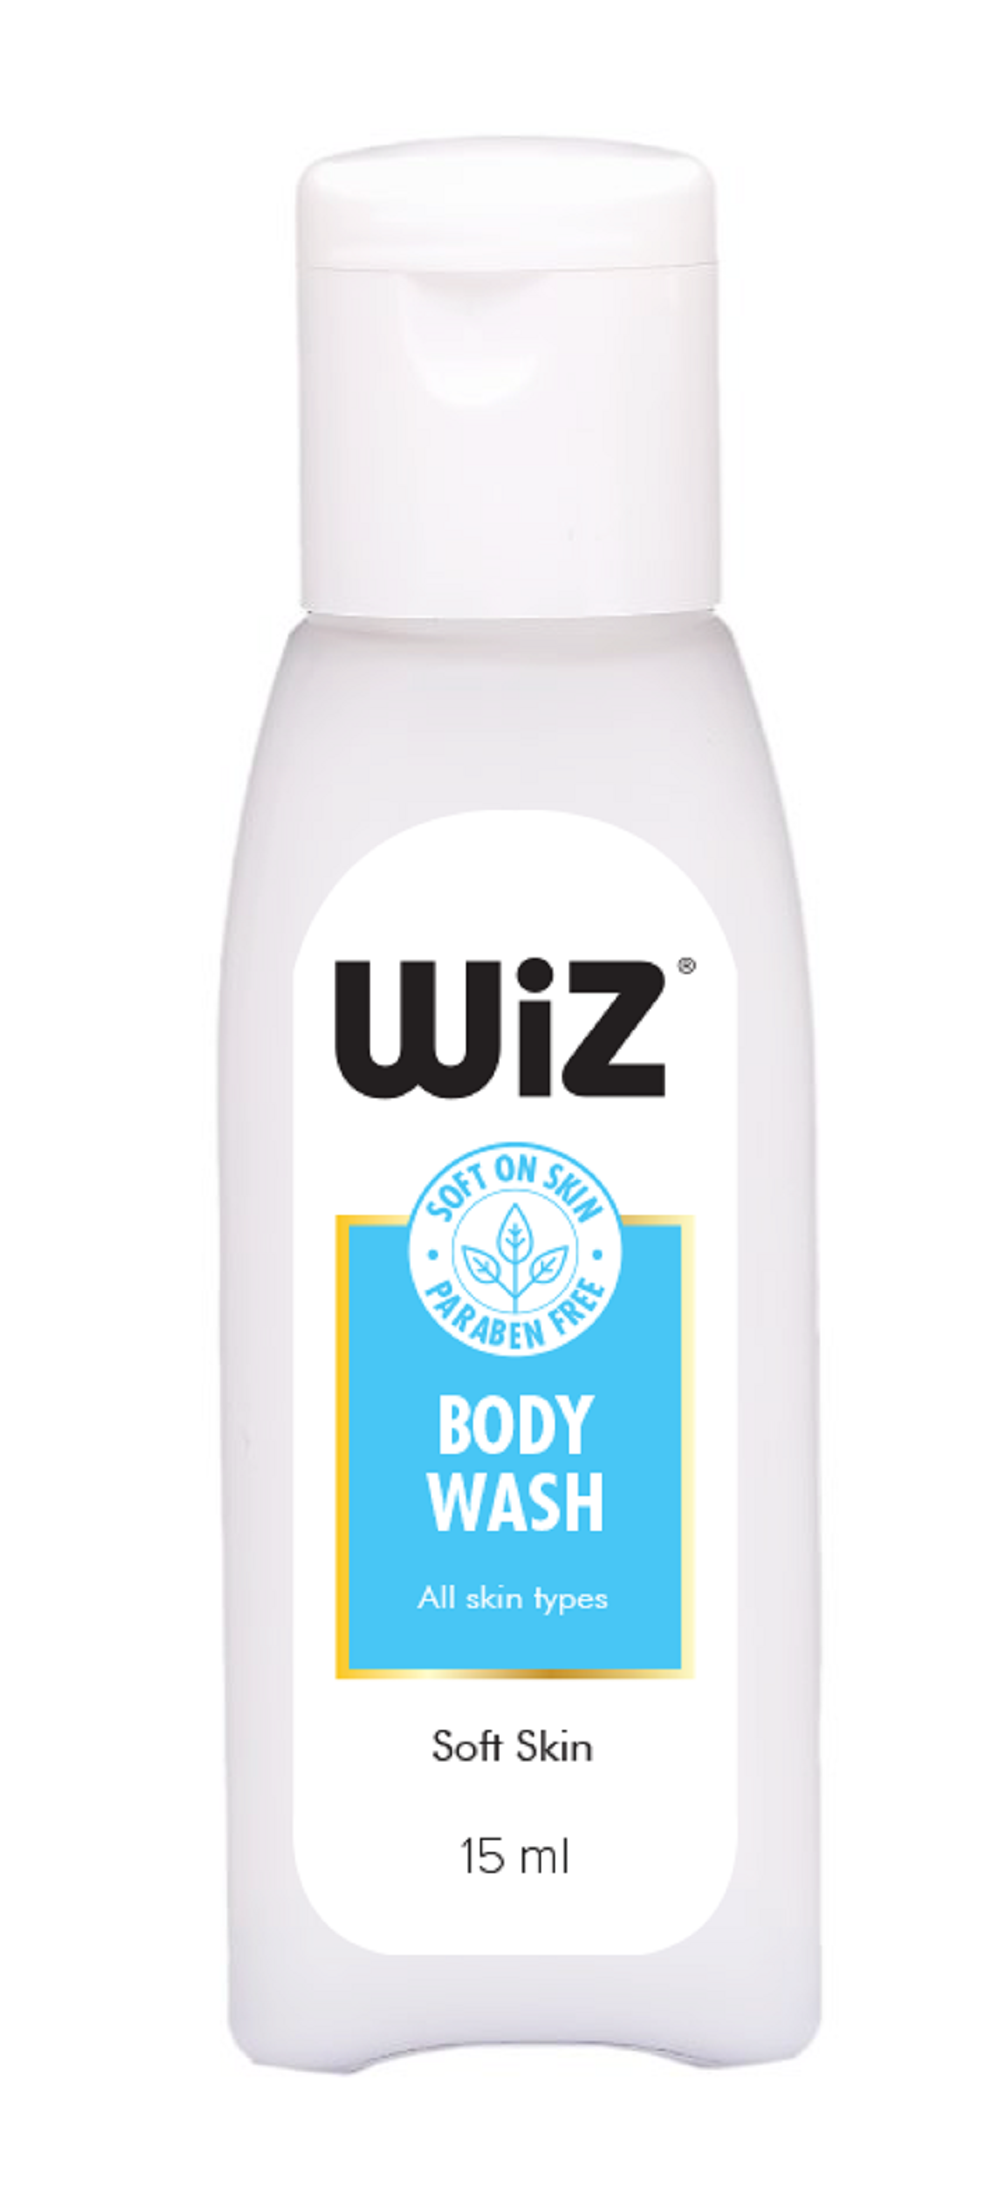 Wiz Hotel Guest Kit 15ml Body Wash Body Lotion Shampoo Conditioner